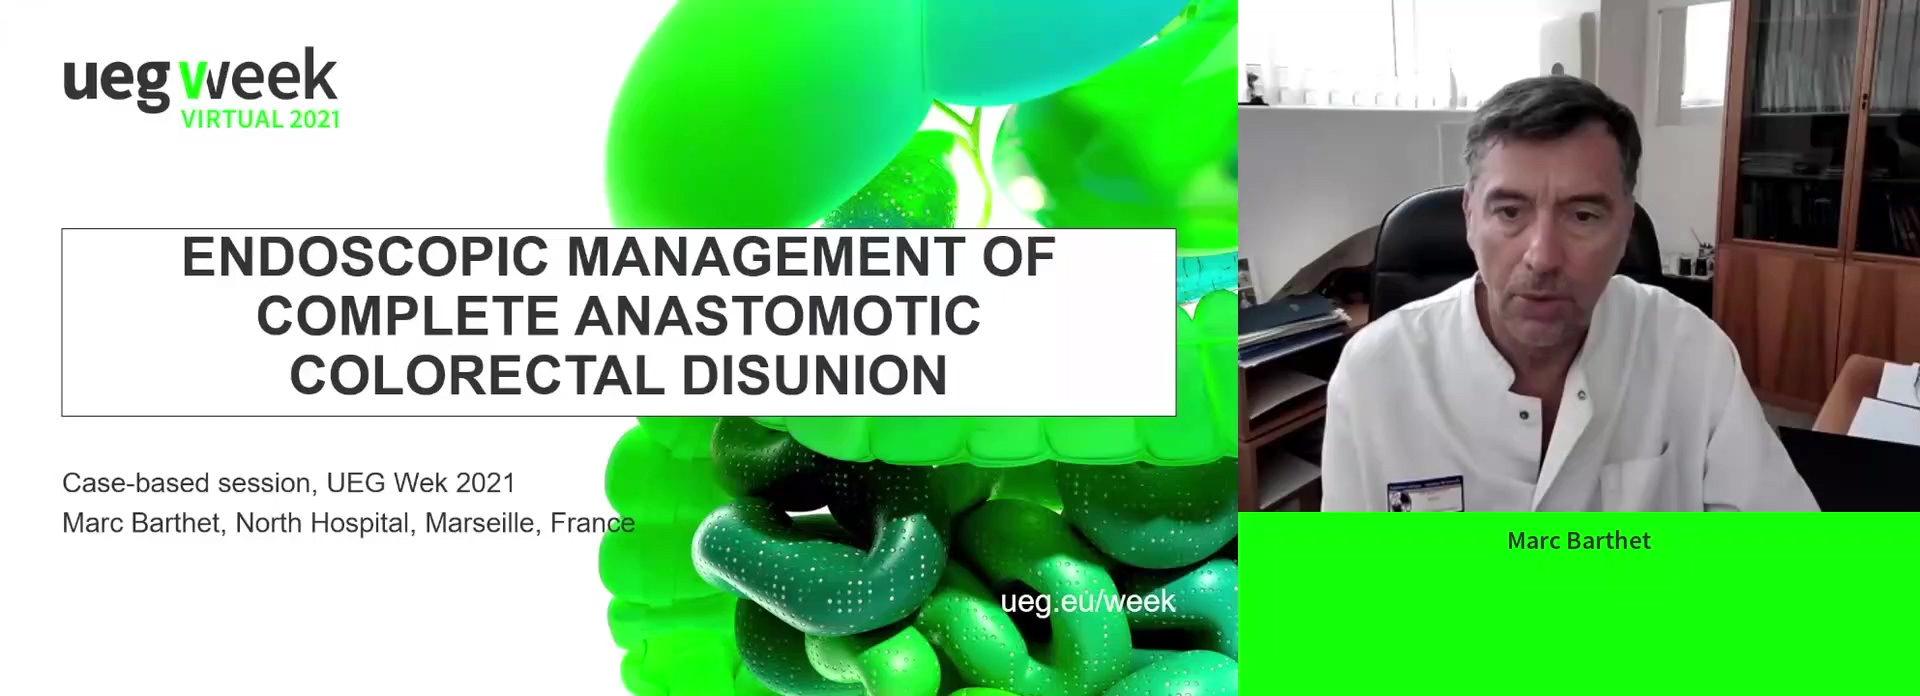 Endoscopic management of complete colorectal anastomotic disunion